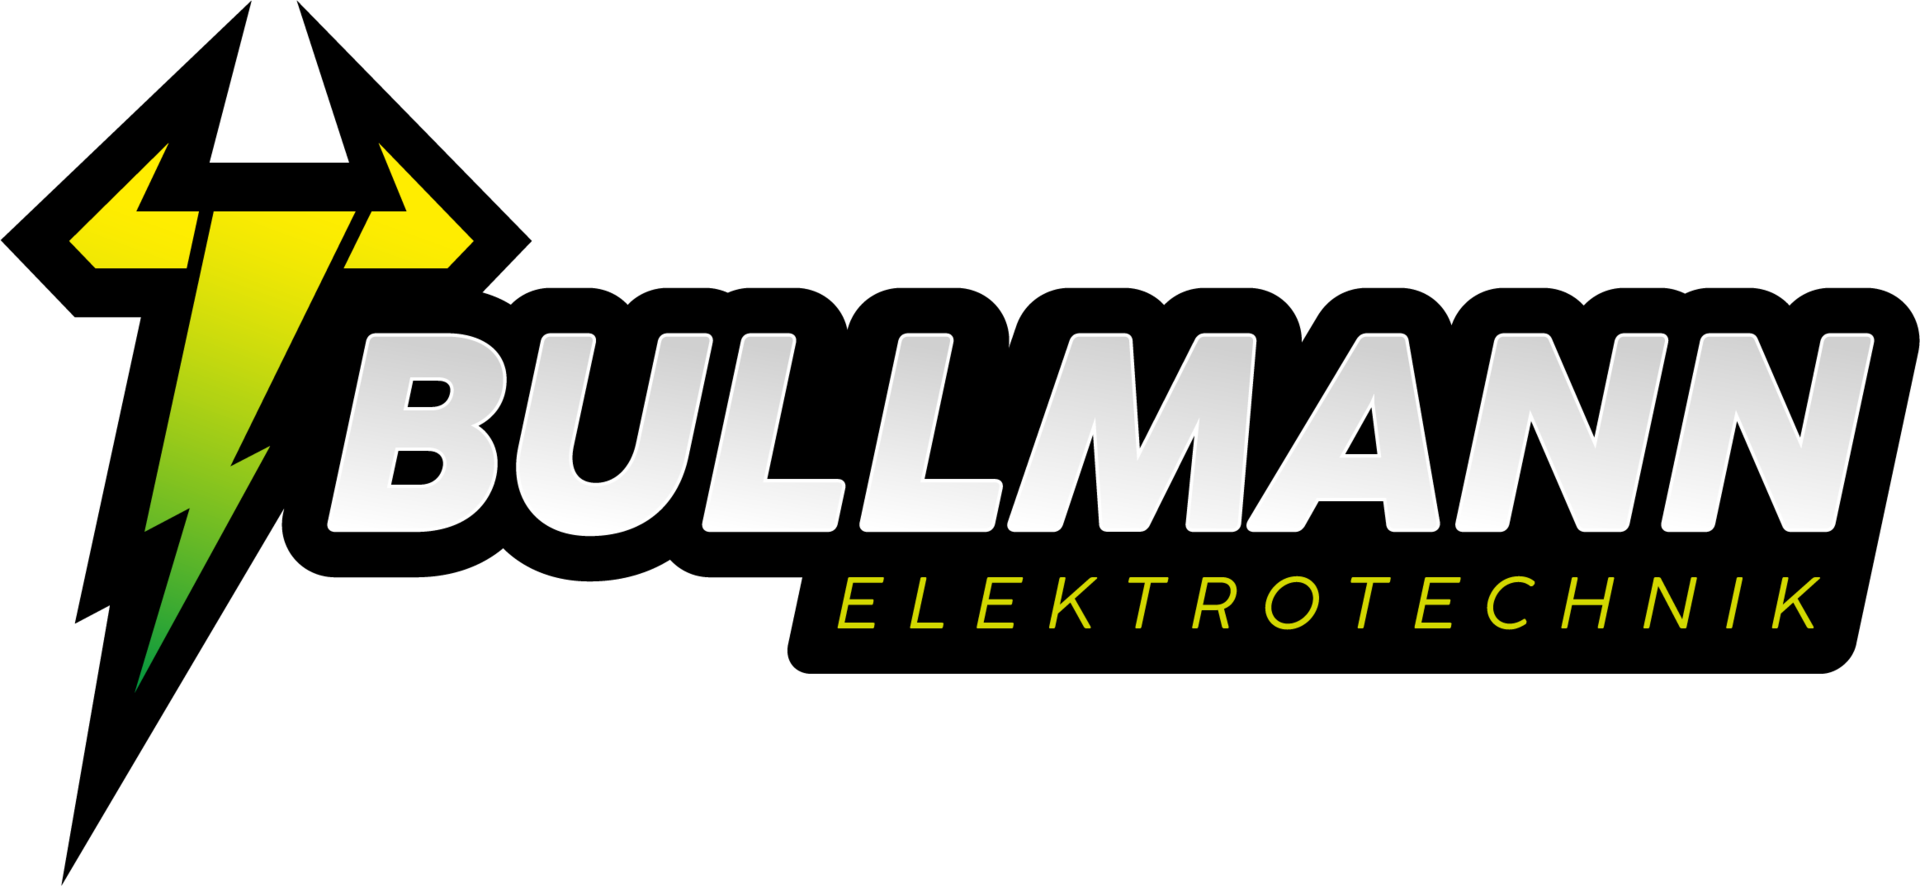 Elektroinstallateur in Dortmund | Bullmann Elektrotechnik